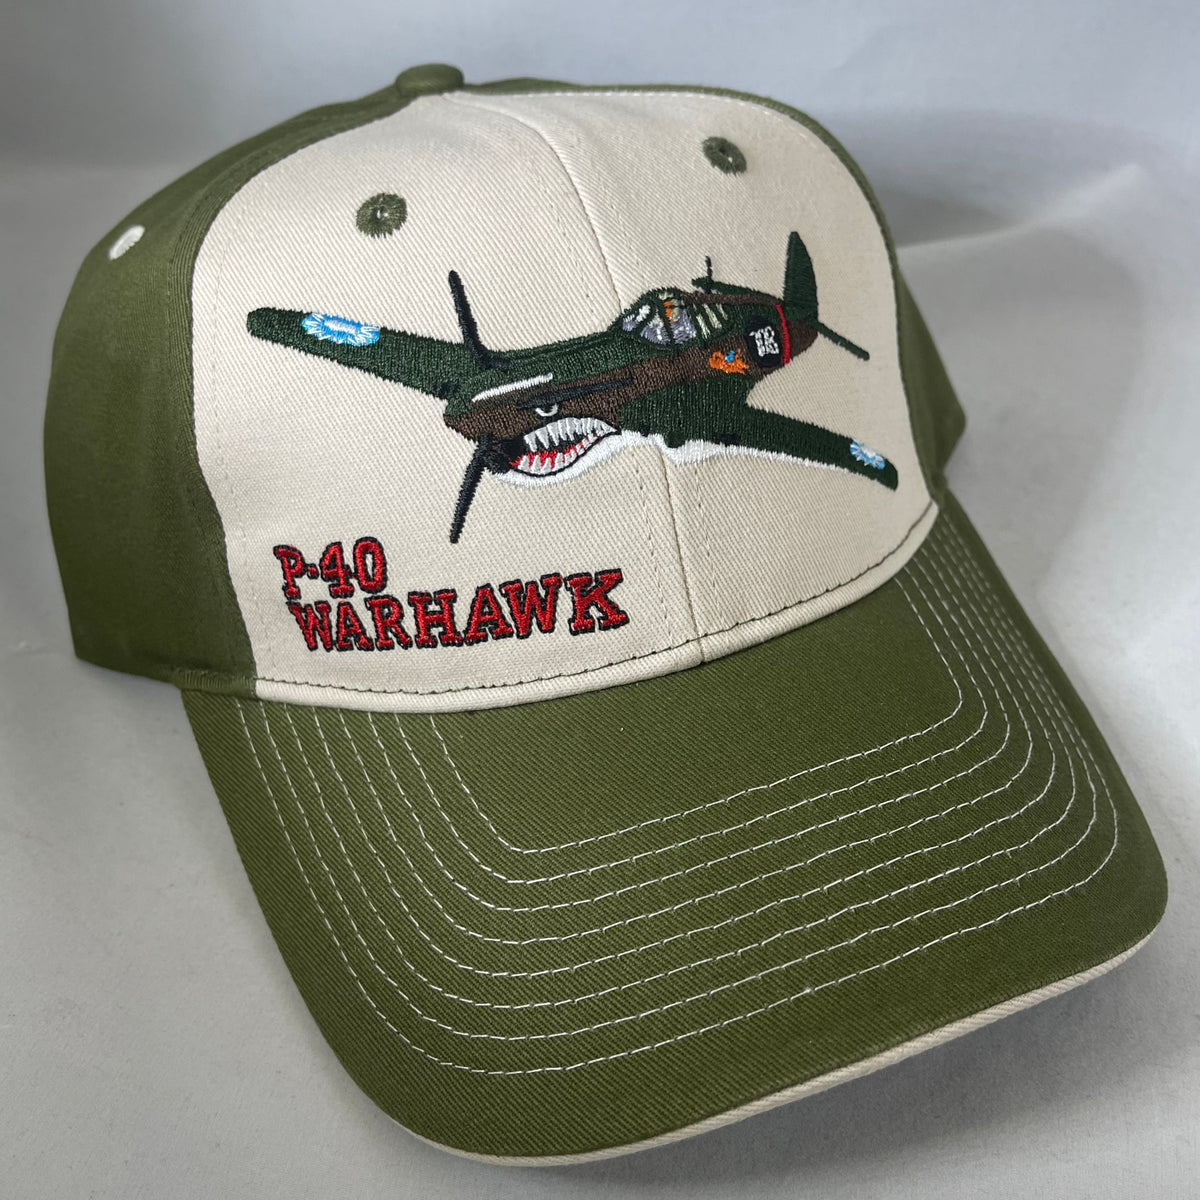 P-40 Warhawk Hat